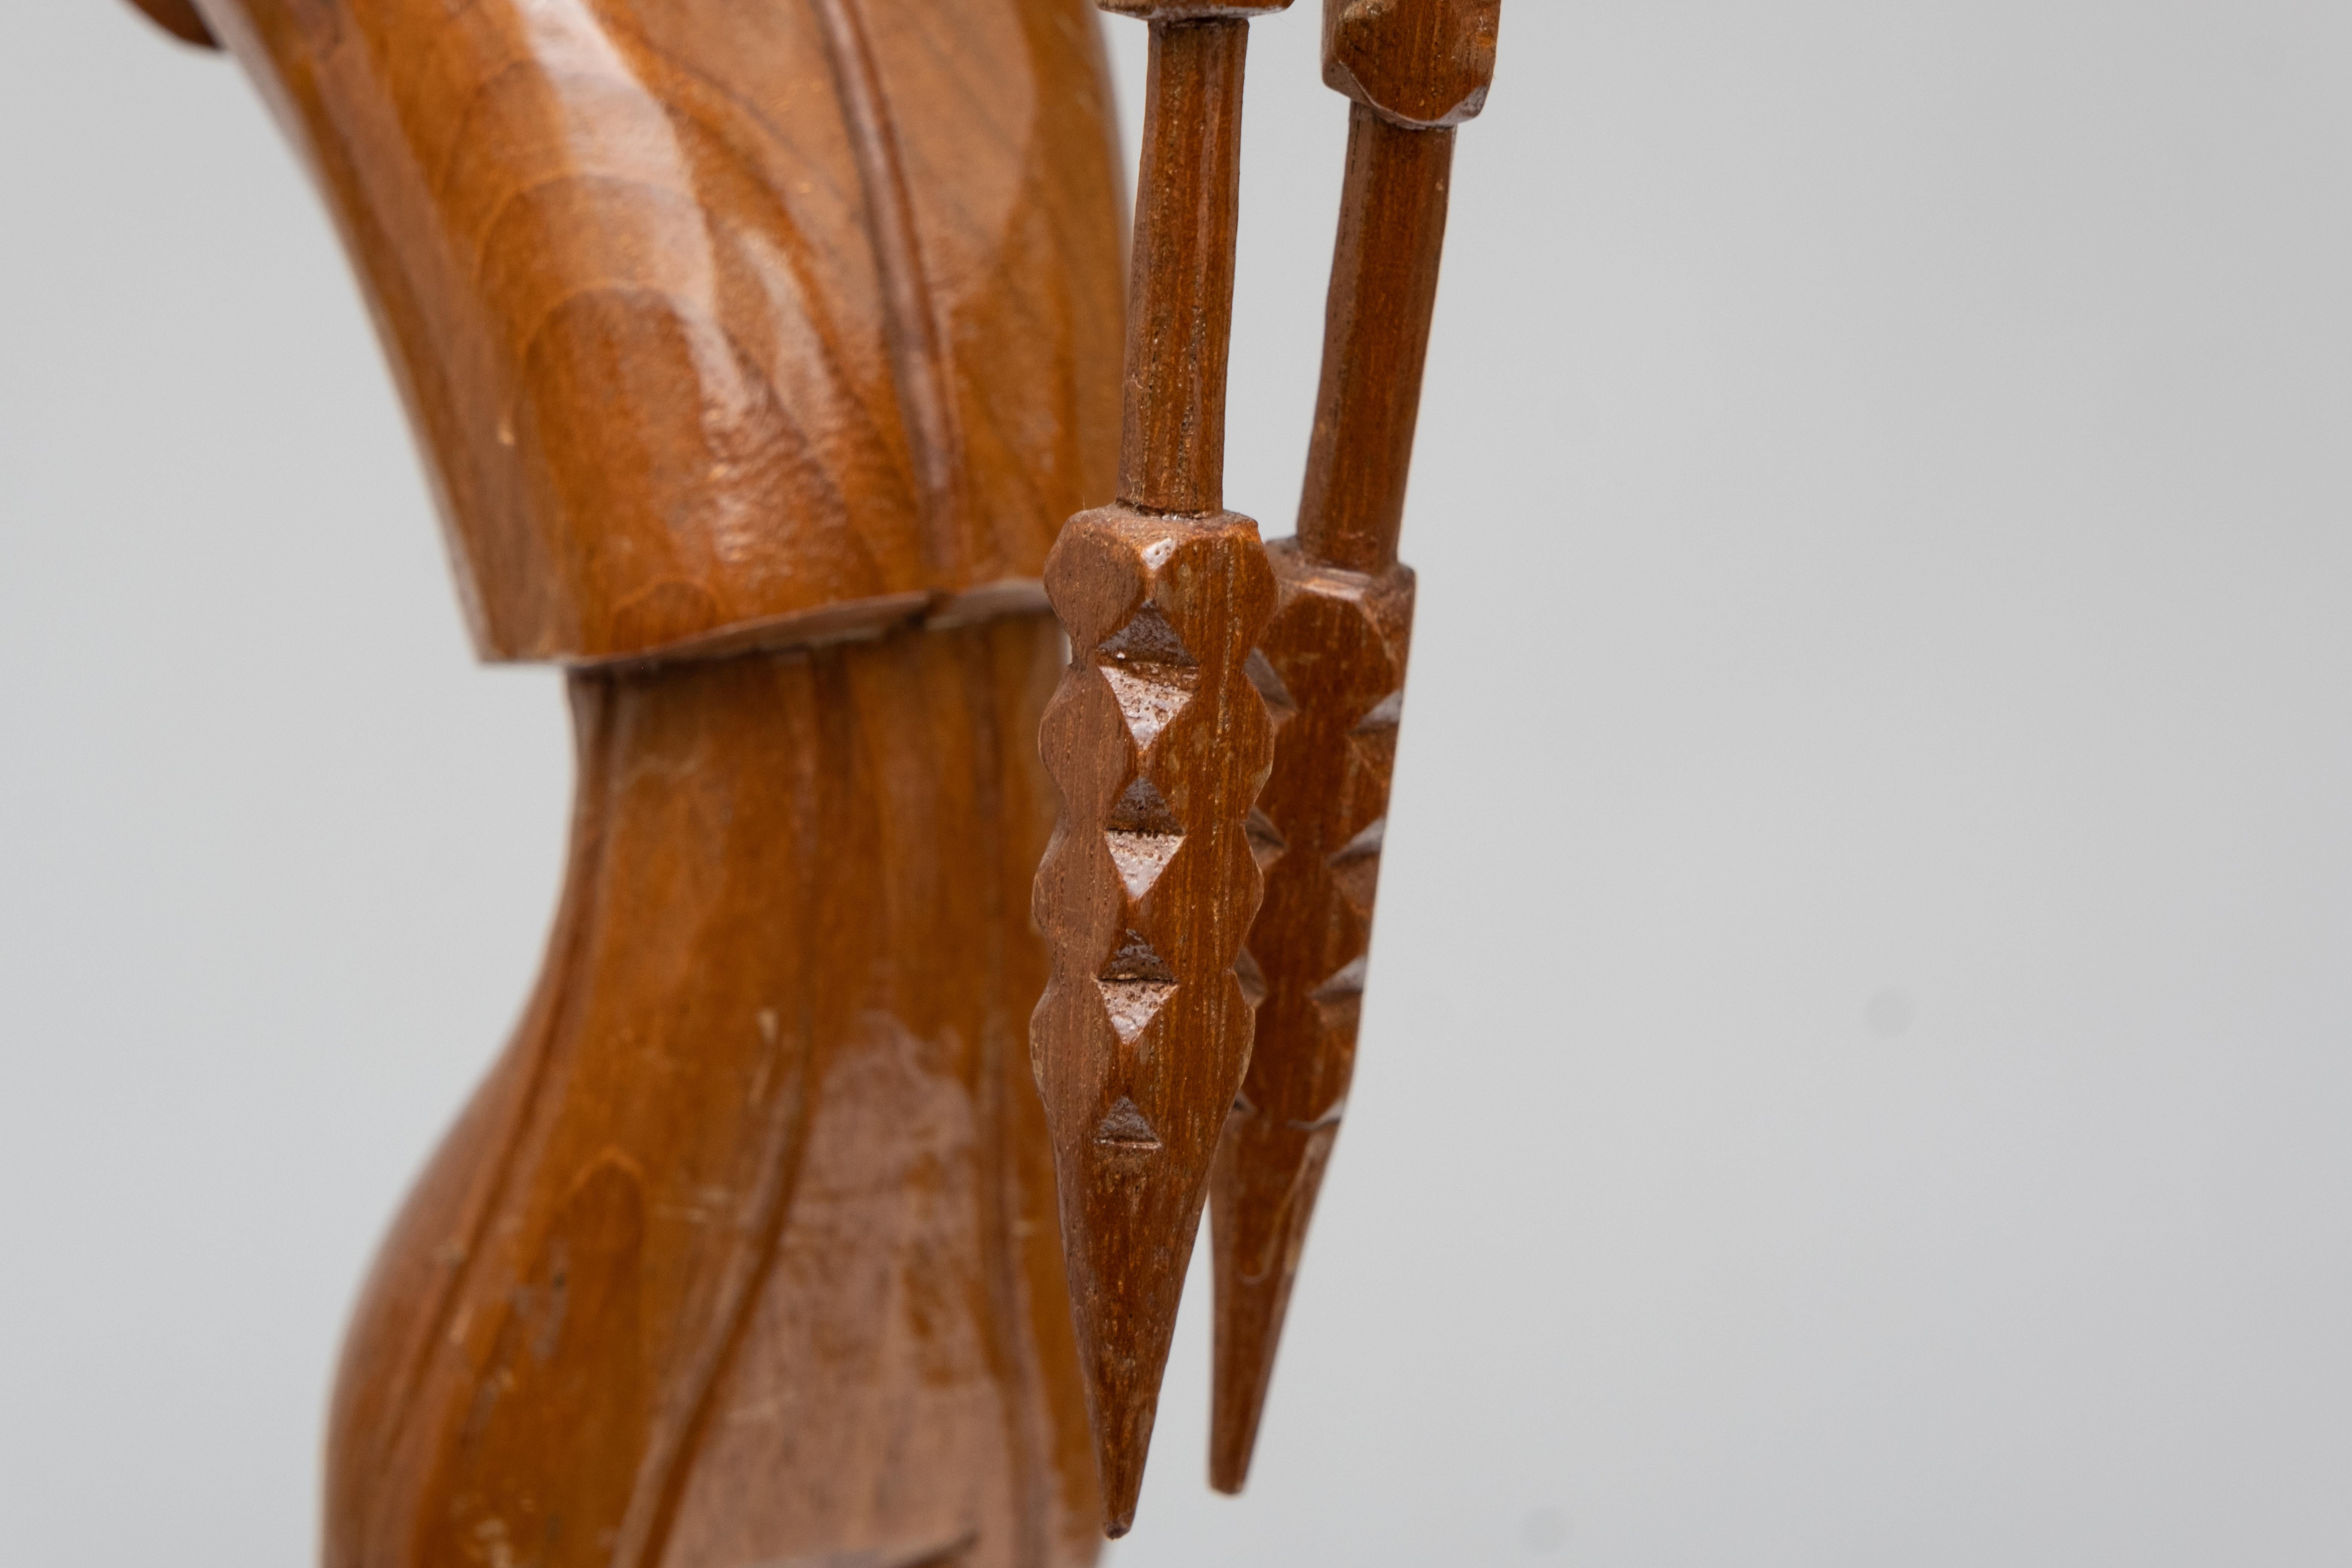 jose pinal wood carving